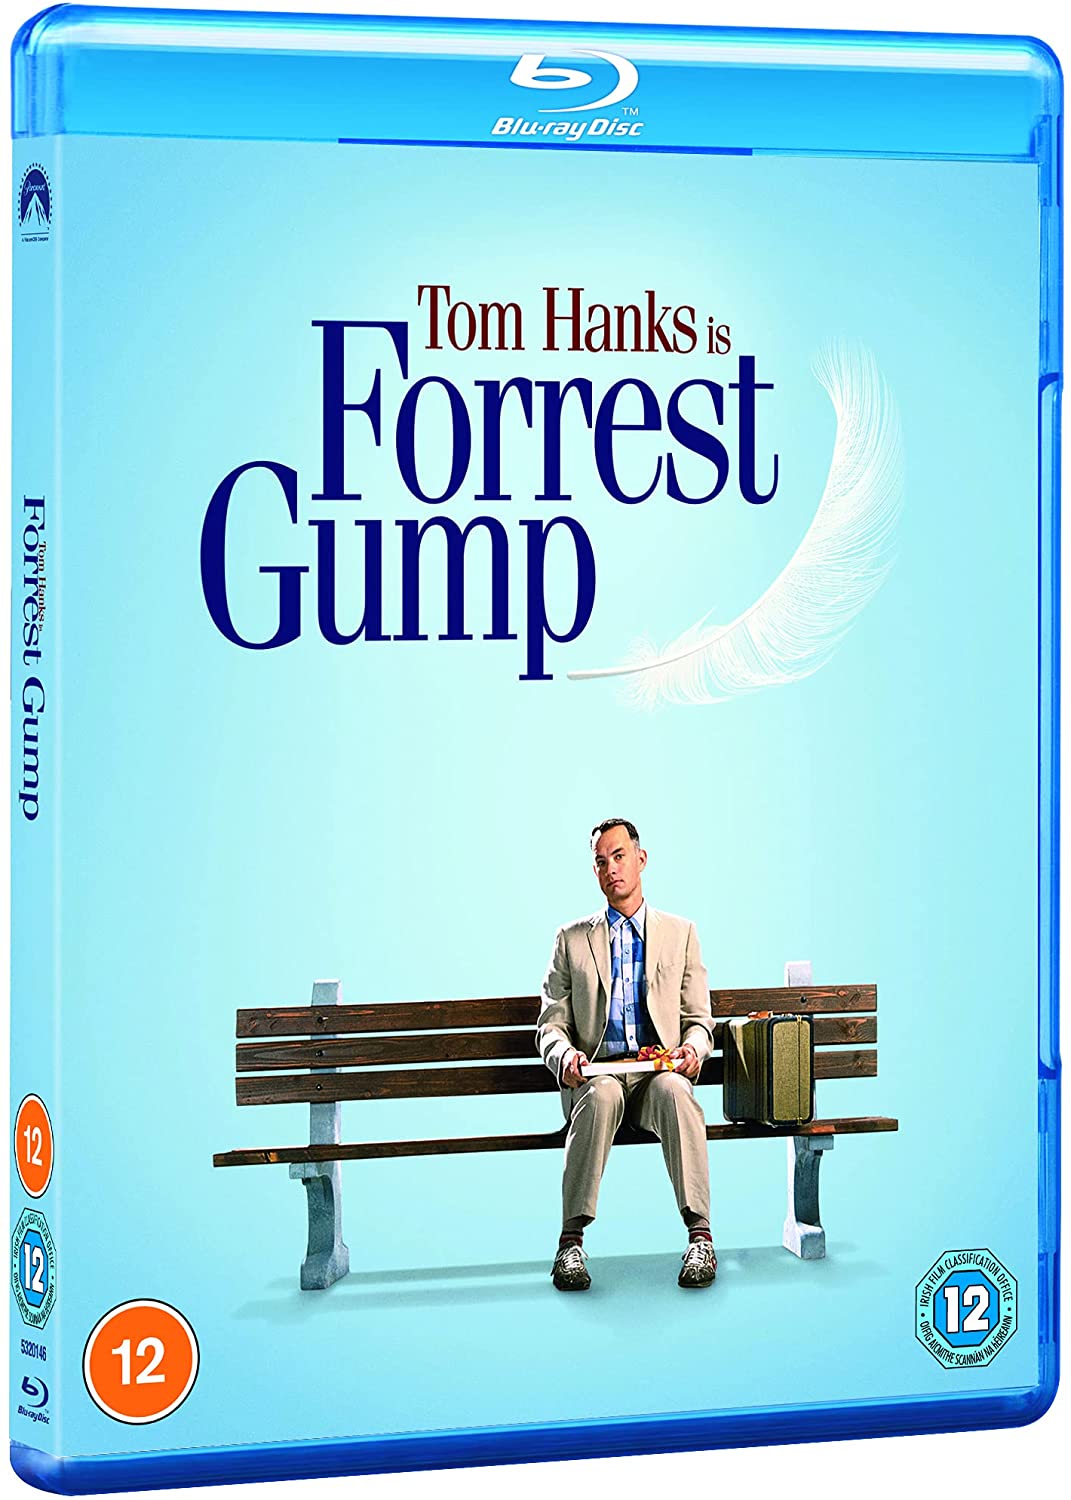 Forrest Gump - Drama/Romance [Blu-ray]